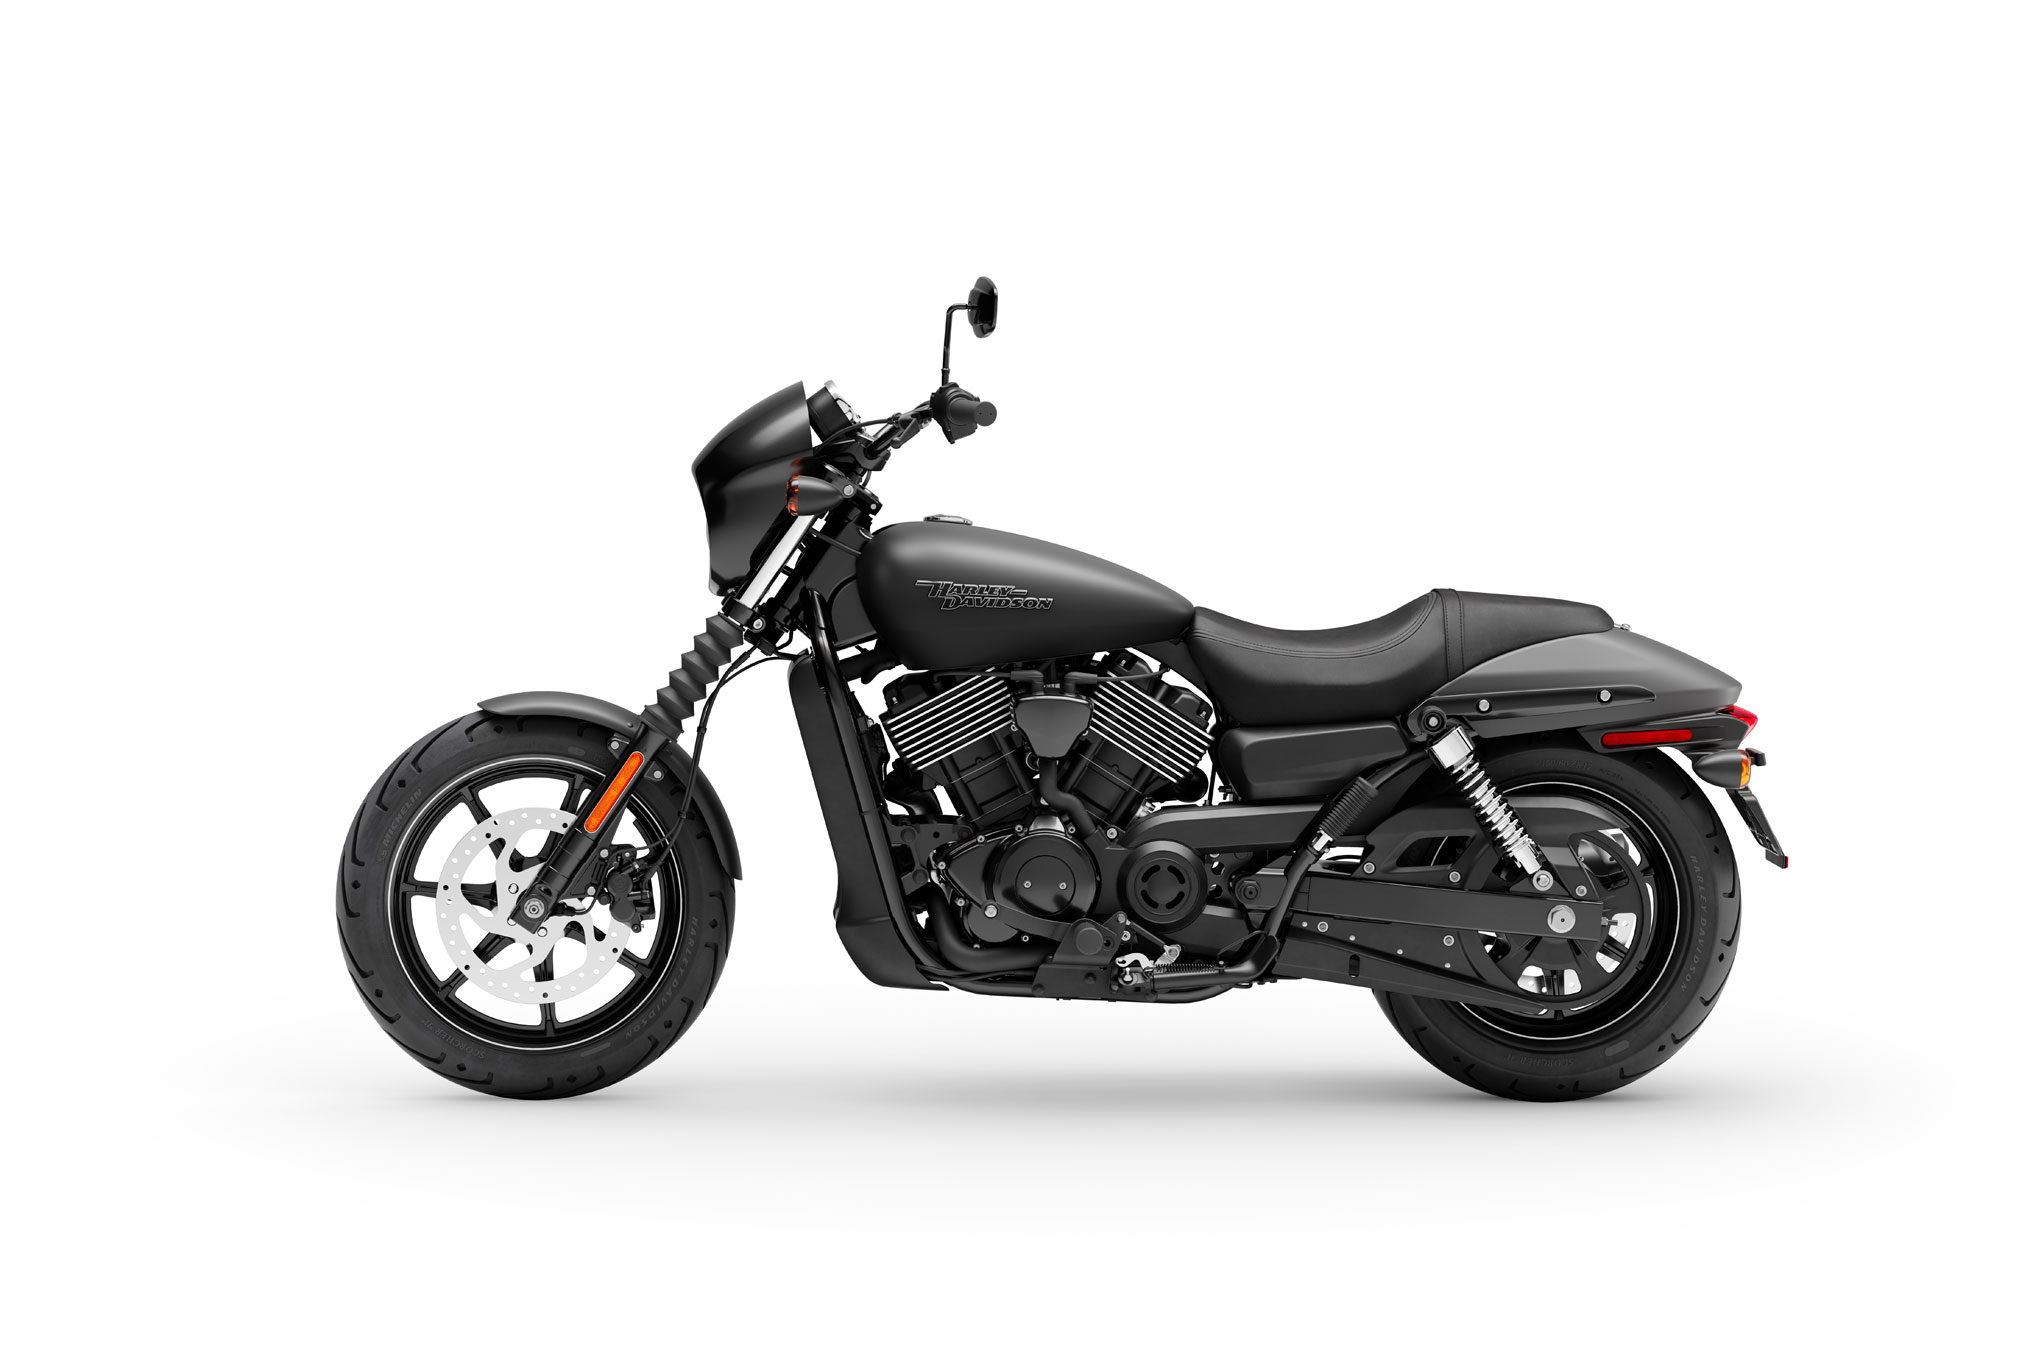 2019 Harley Davidson Street 750 Guide Total Motorcycle